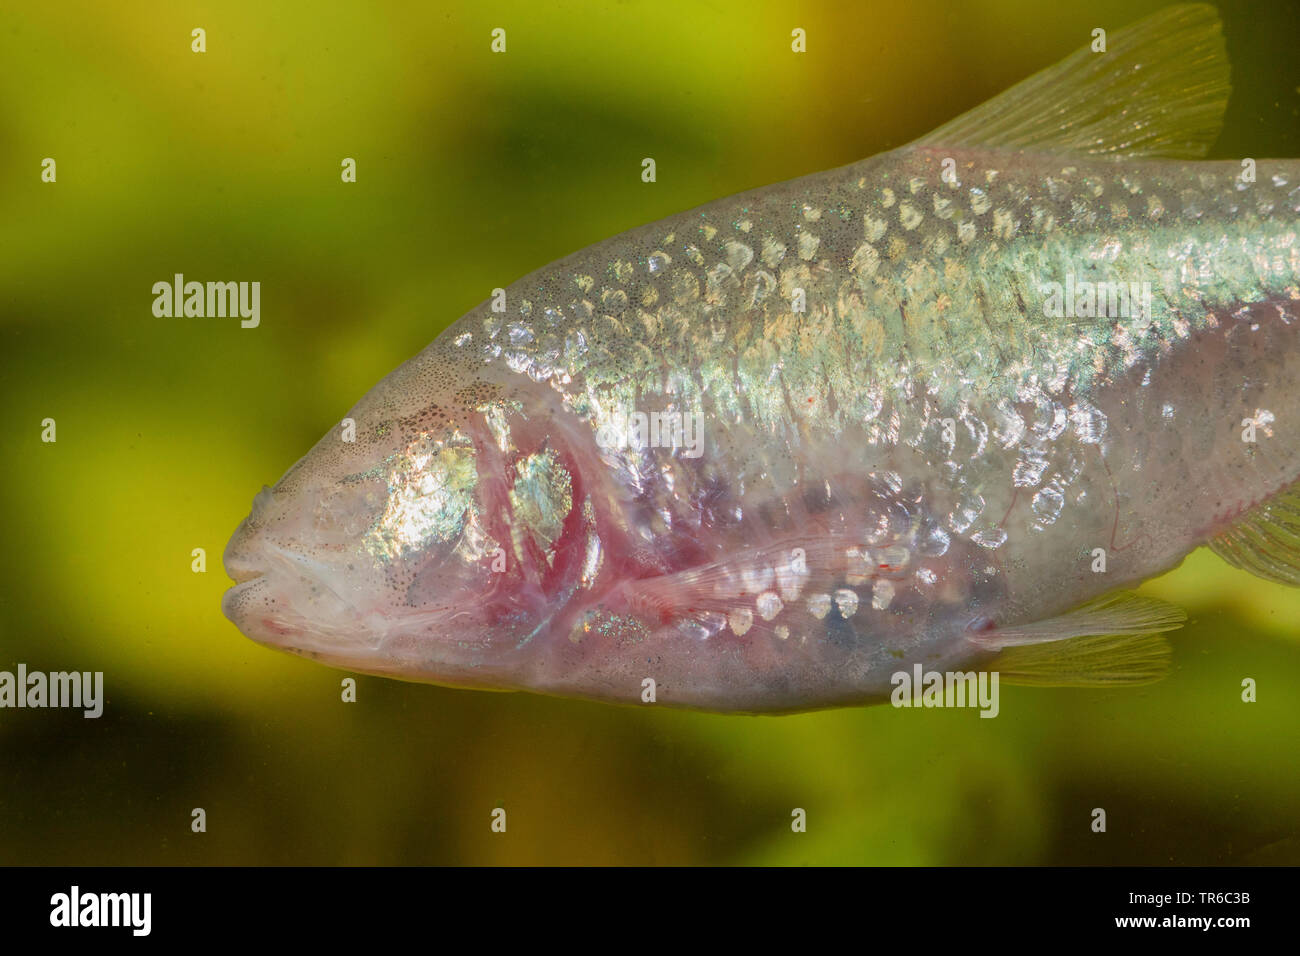 Cueva ciega, ciega cavefish tetra (Anoptichthys jordani, Astyanax fasciatus mexicanus), retrato de longitud media, vista lateral Foto de stock